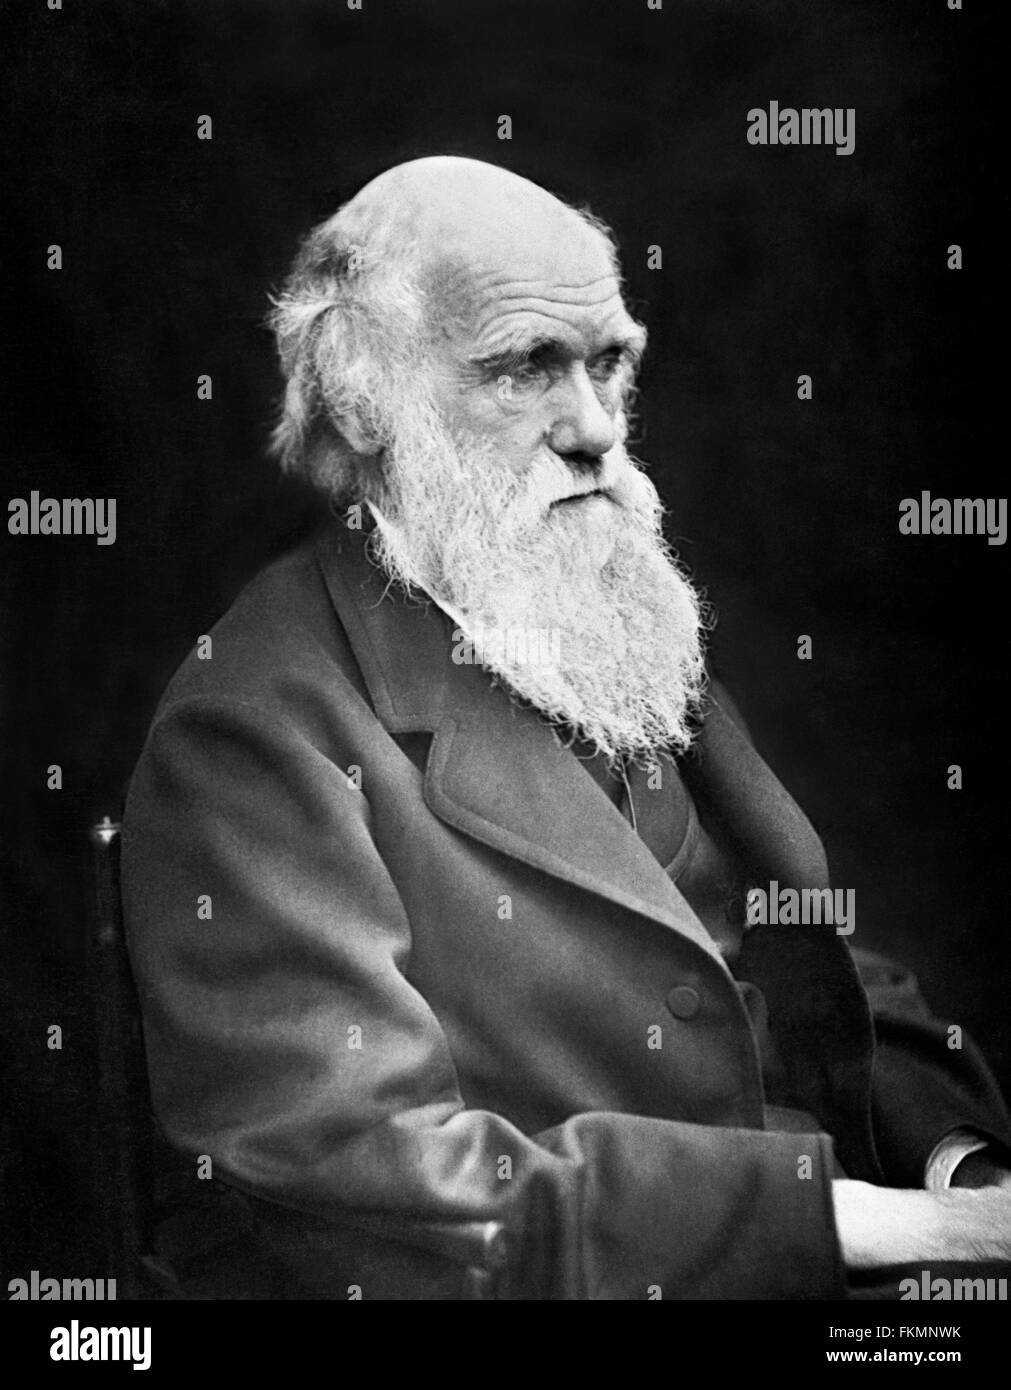 Charles Darwin. Portrait of the English naturalist Charles Darwin (1809-1882) taken c.1869 Stock Photo